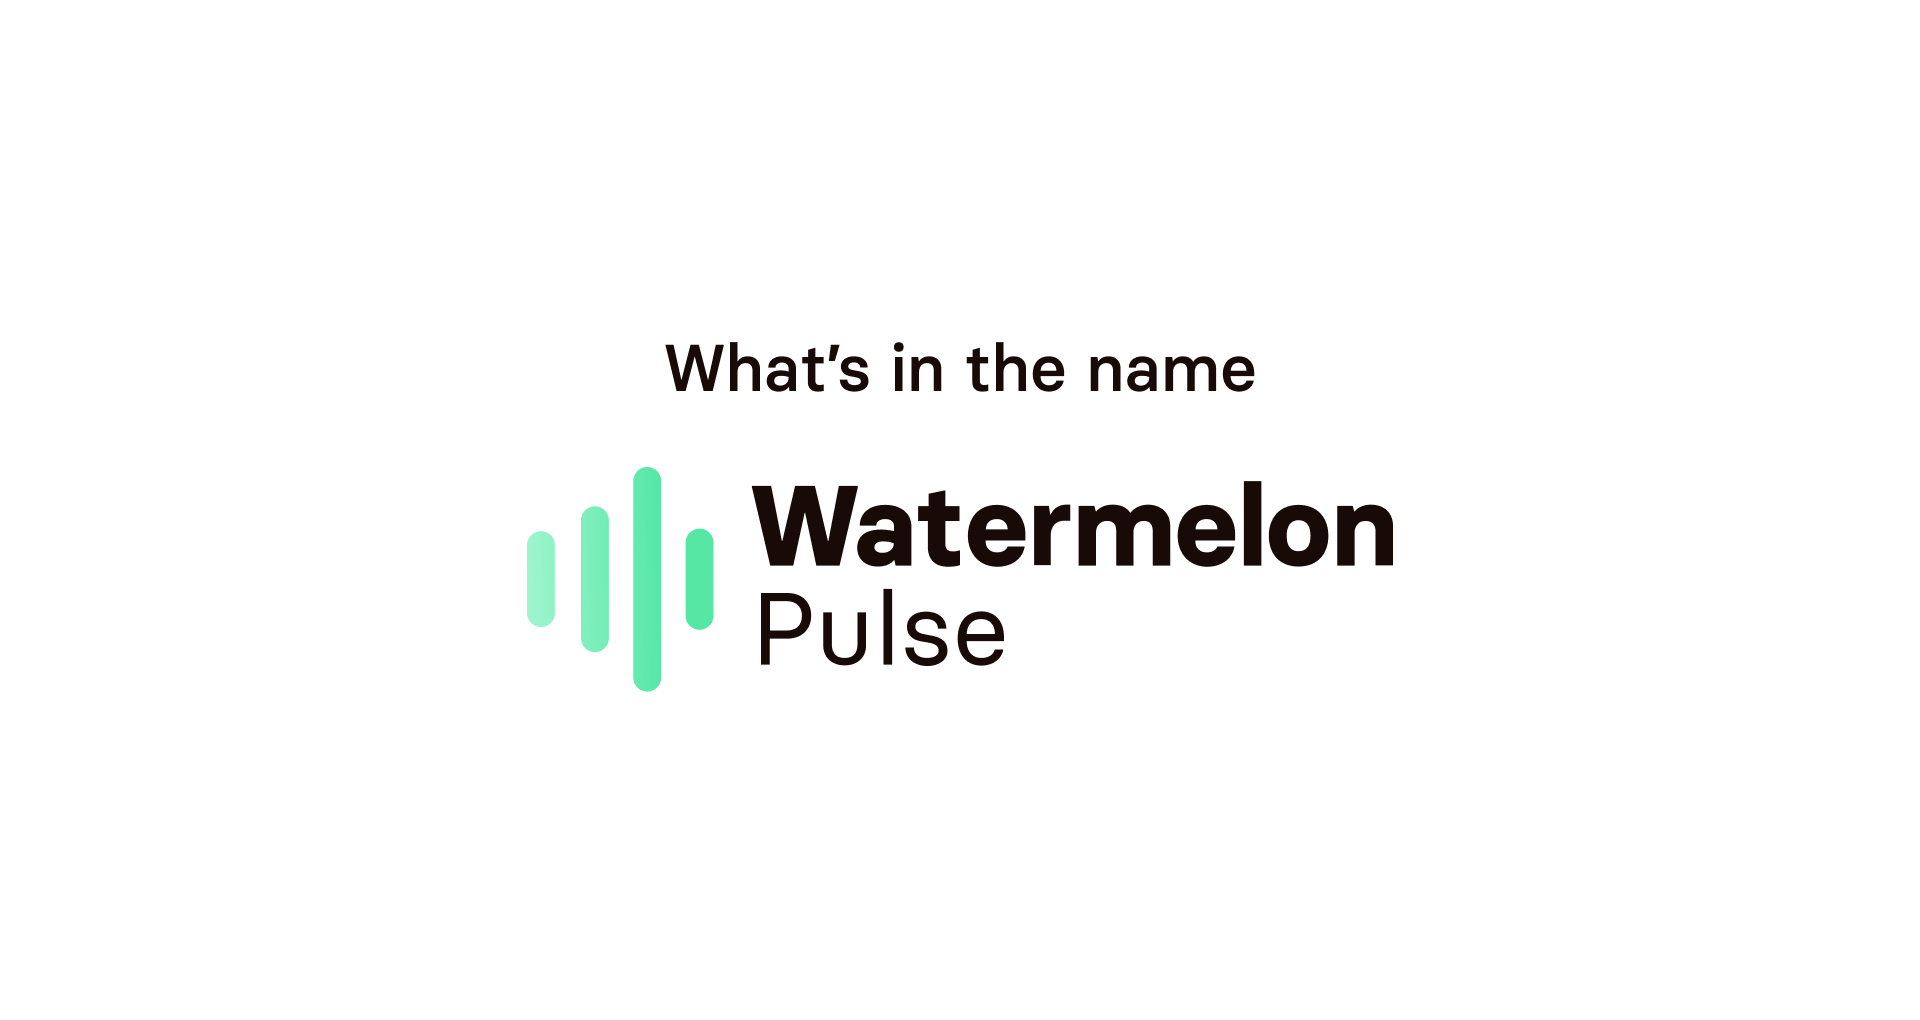 Watermelon Pulse